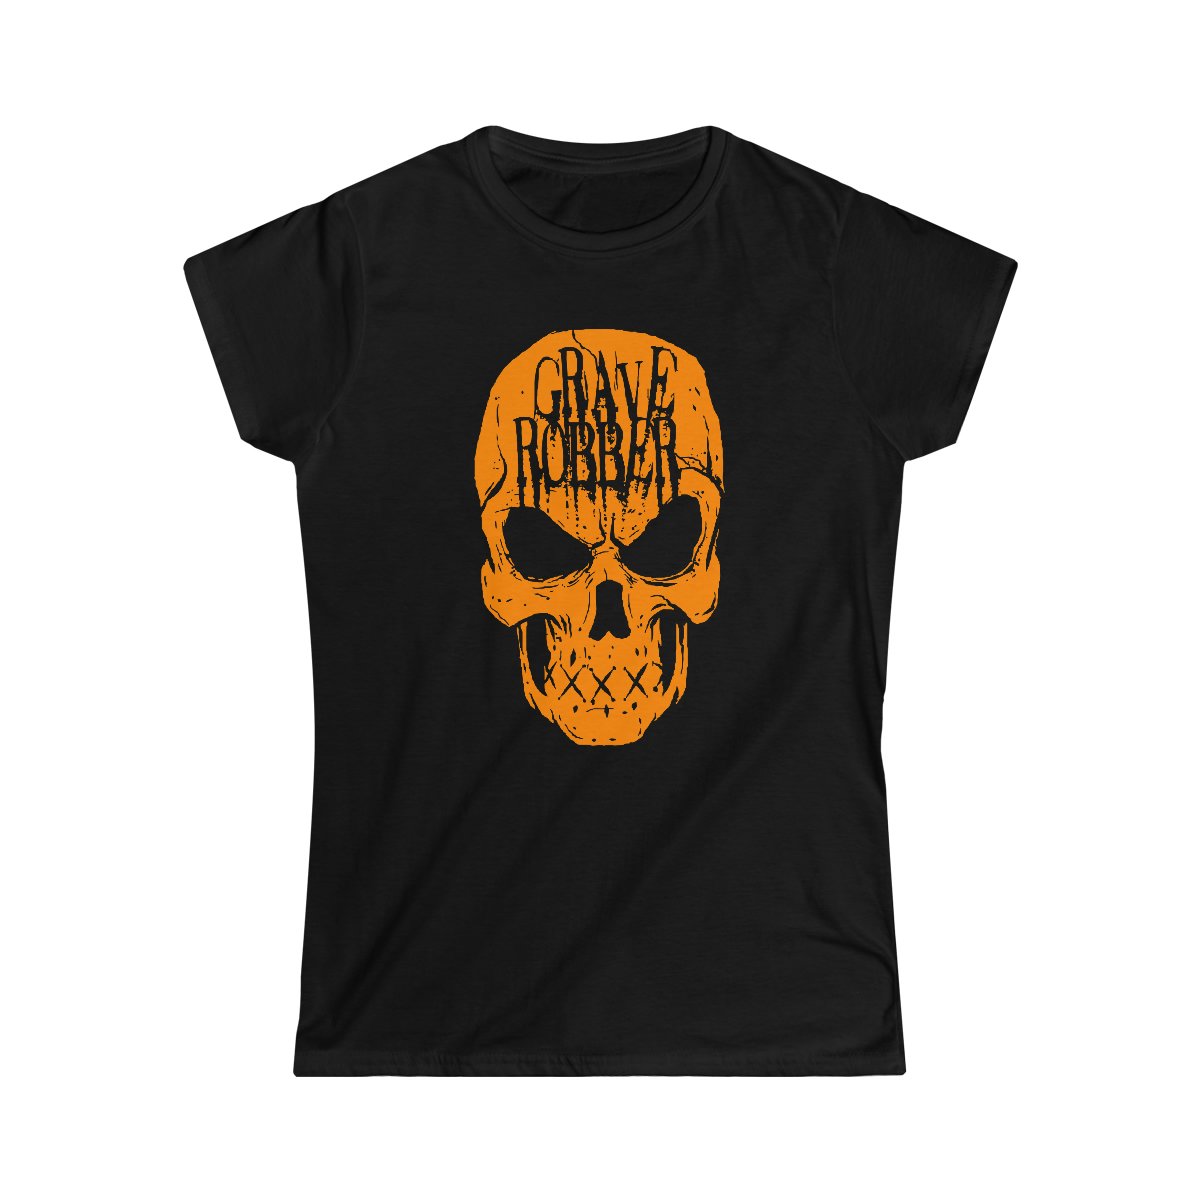 Grave Robber Skull (Limited Edition Orange) Women’s Short Sleeve Tshirt